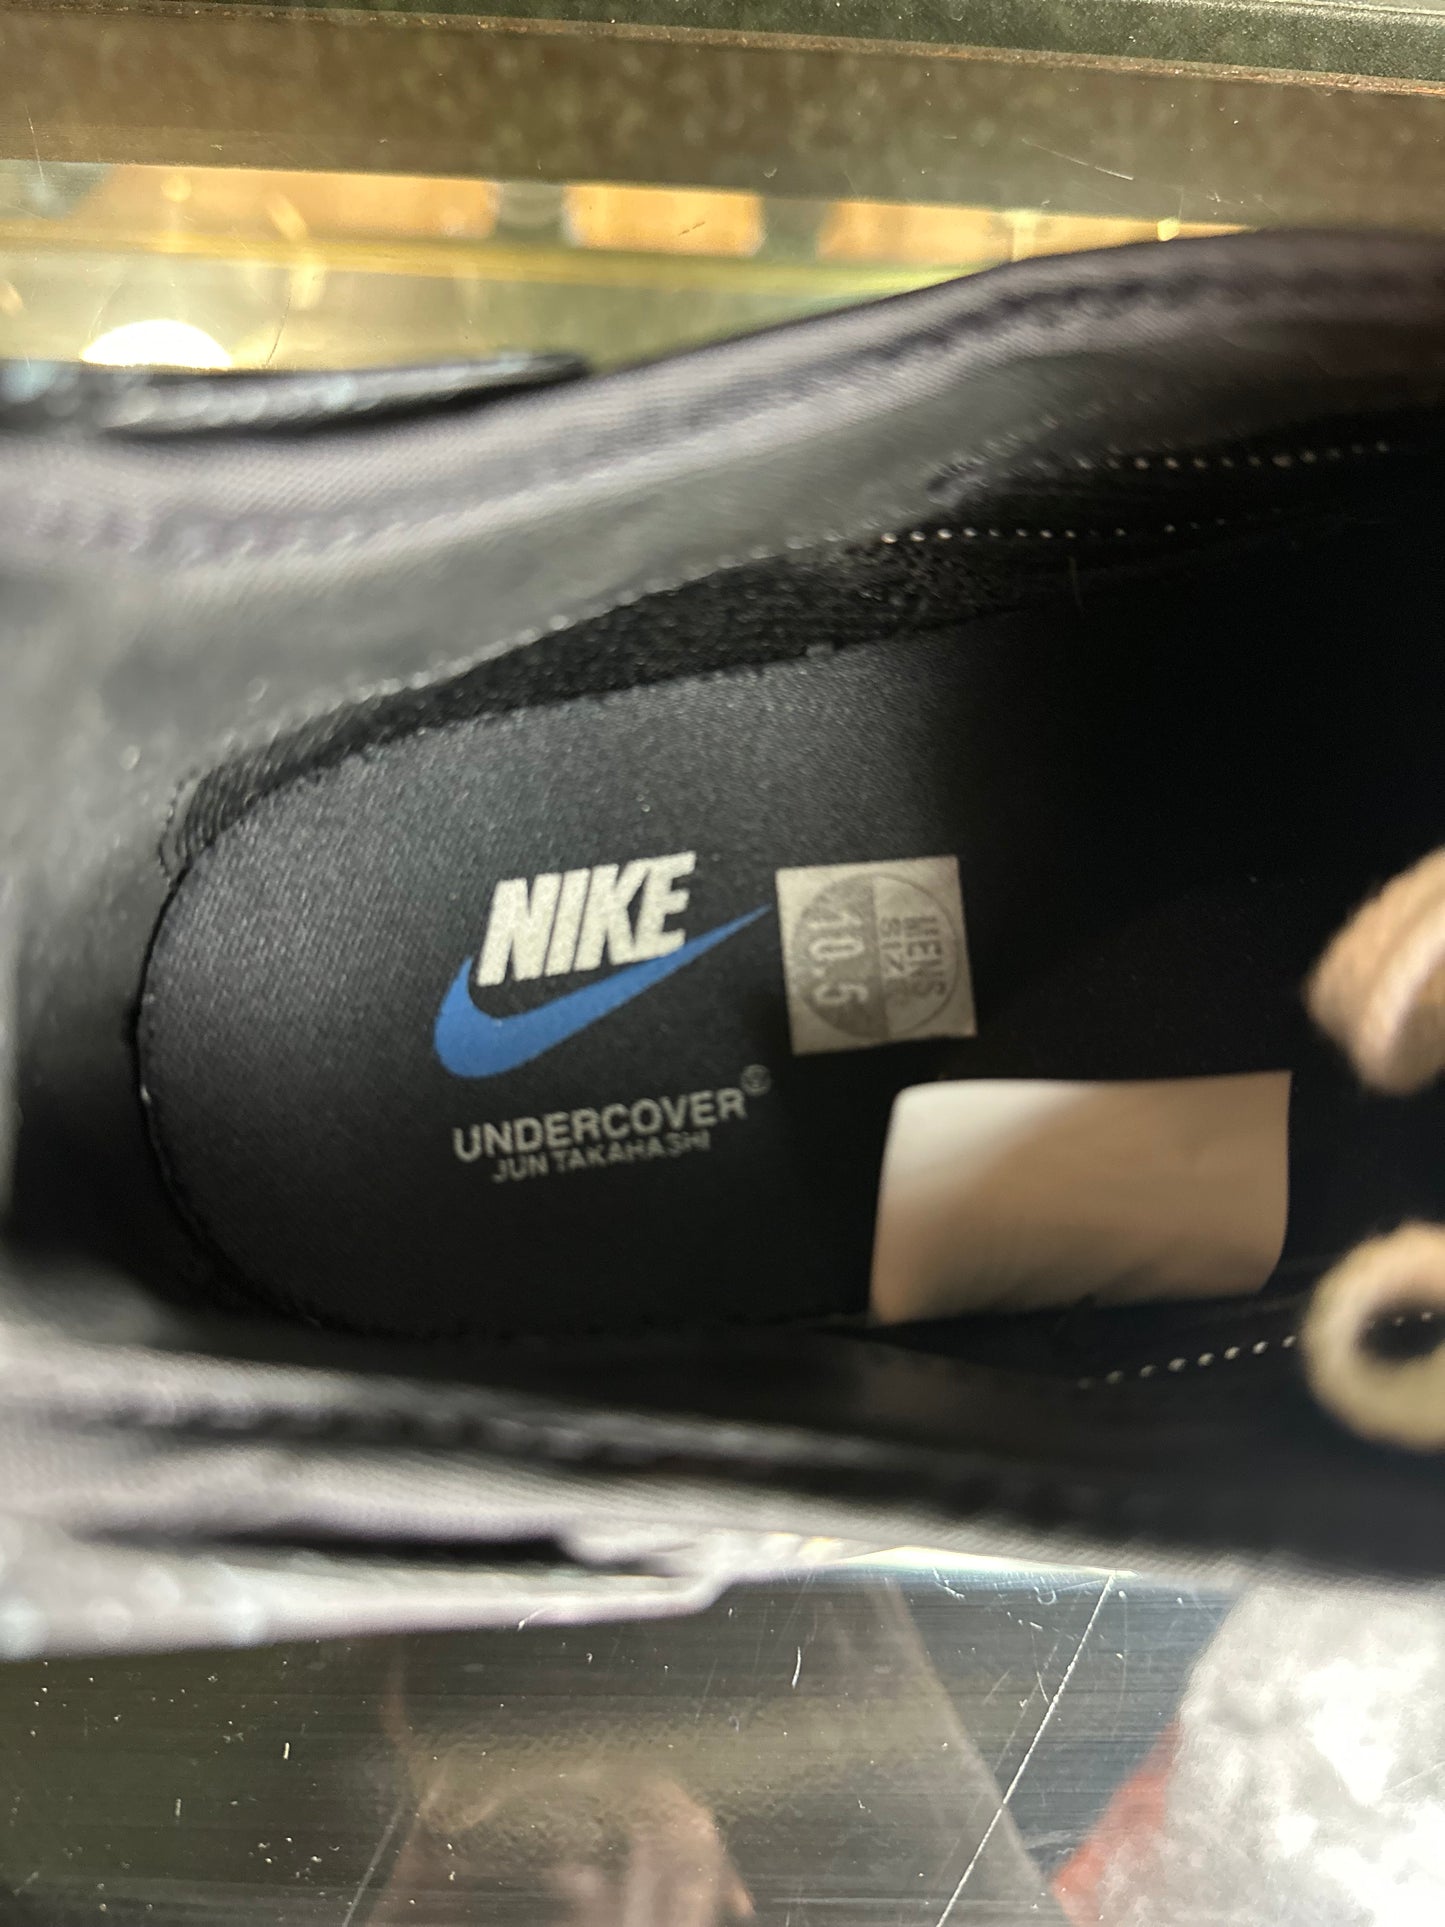 Undercover x Nike Daybreak “Black/Summit Wht” Size 10.5 PO OG